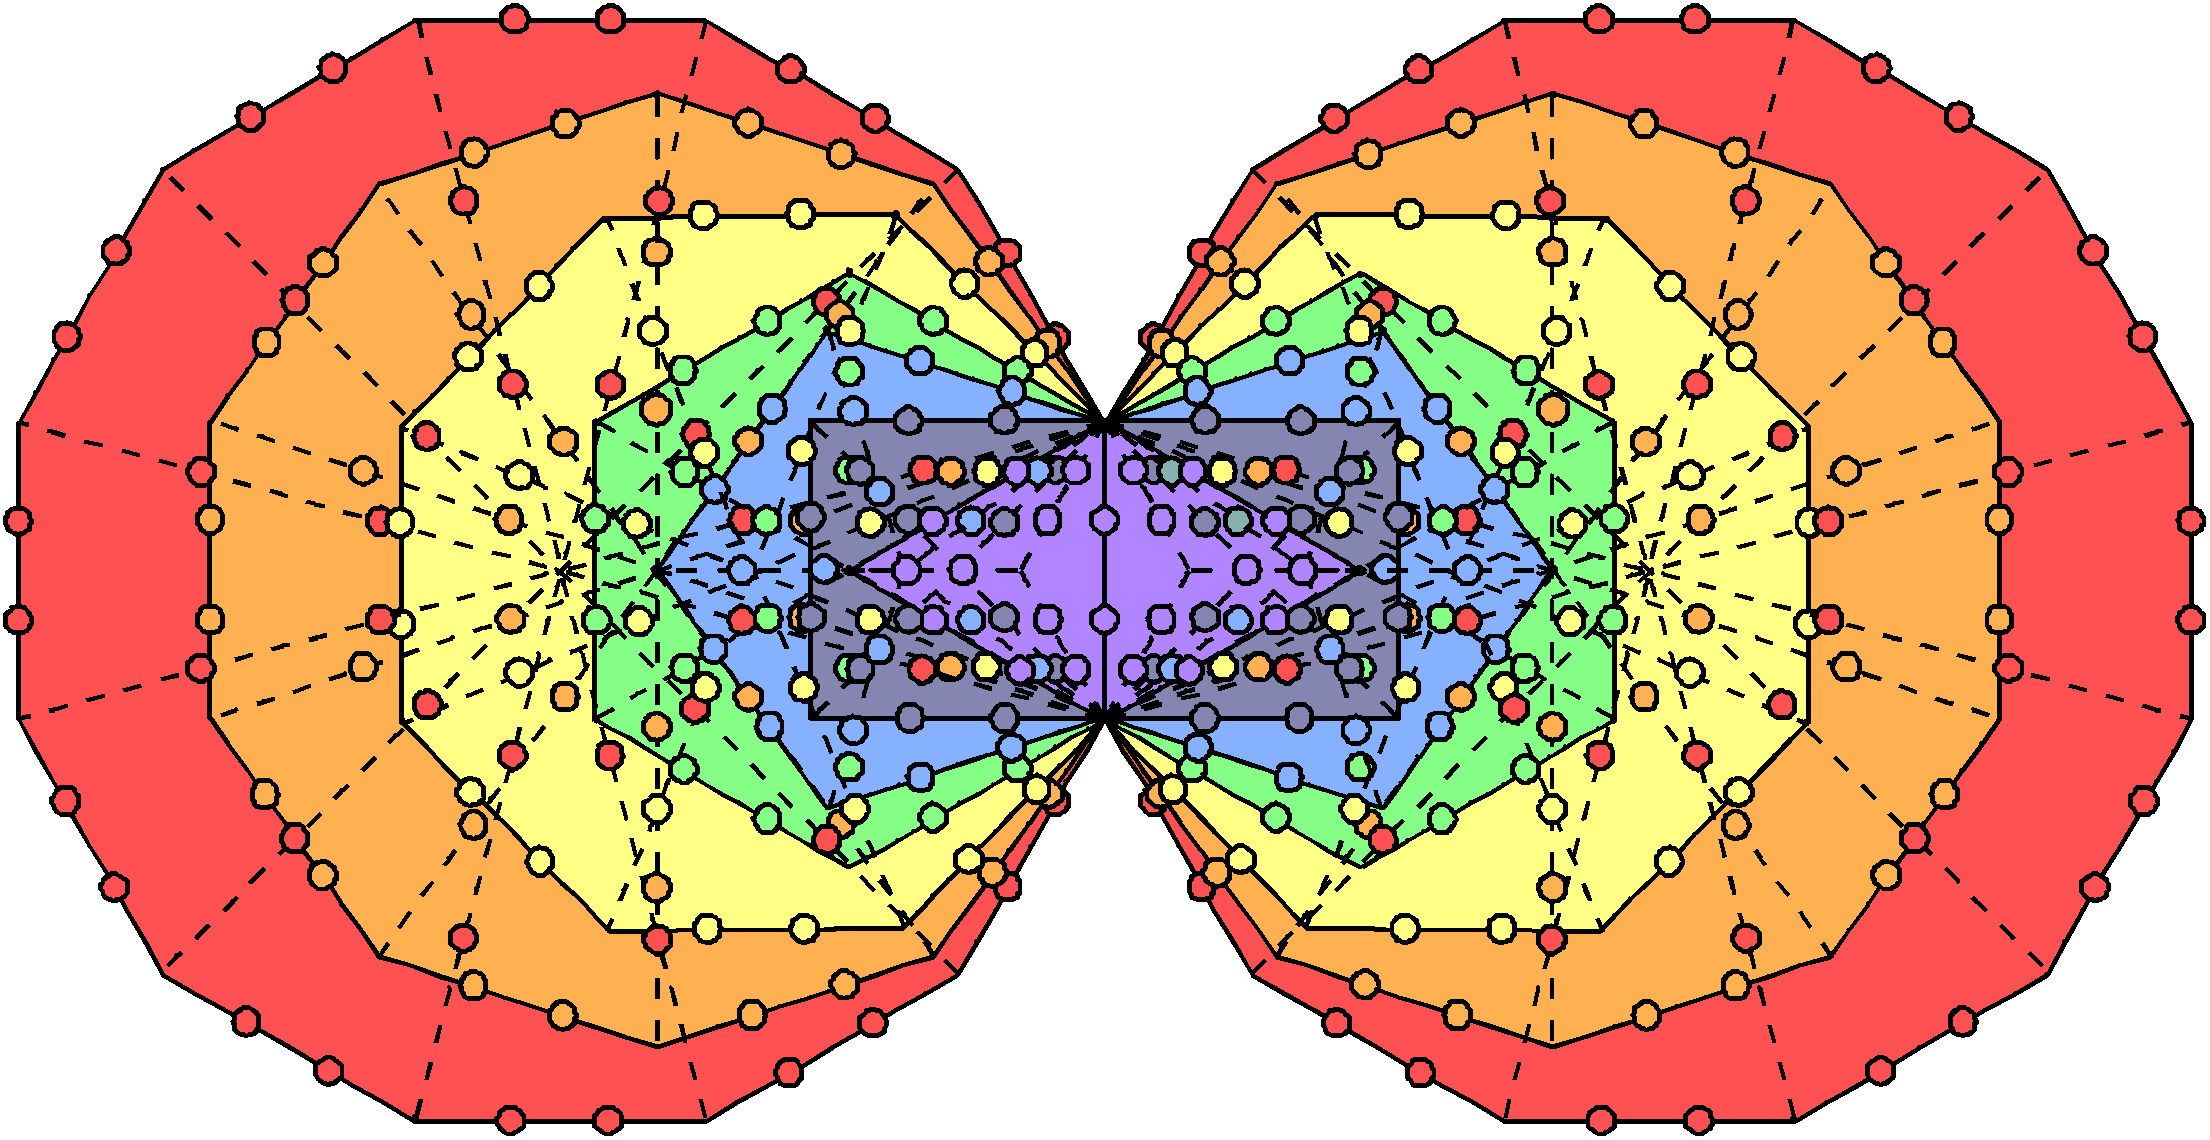 350 hexagonal yods in (7+7) enfolded polygons